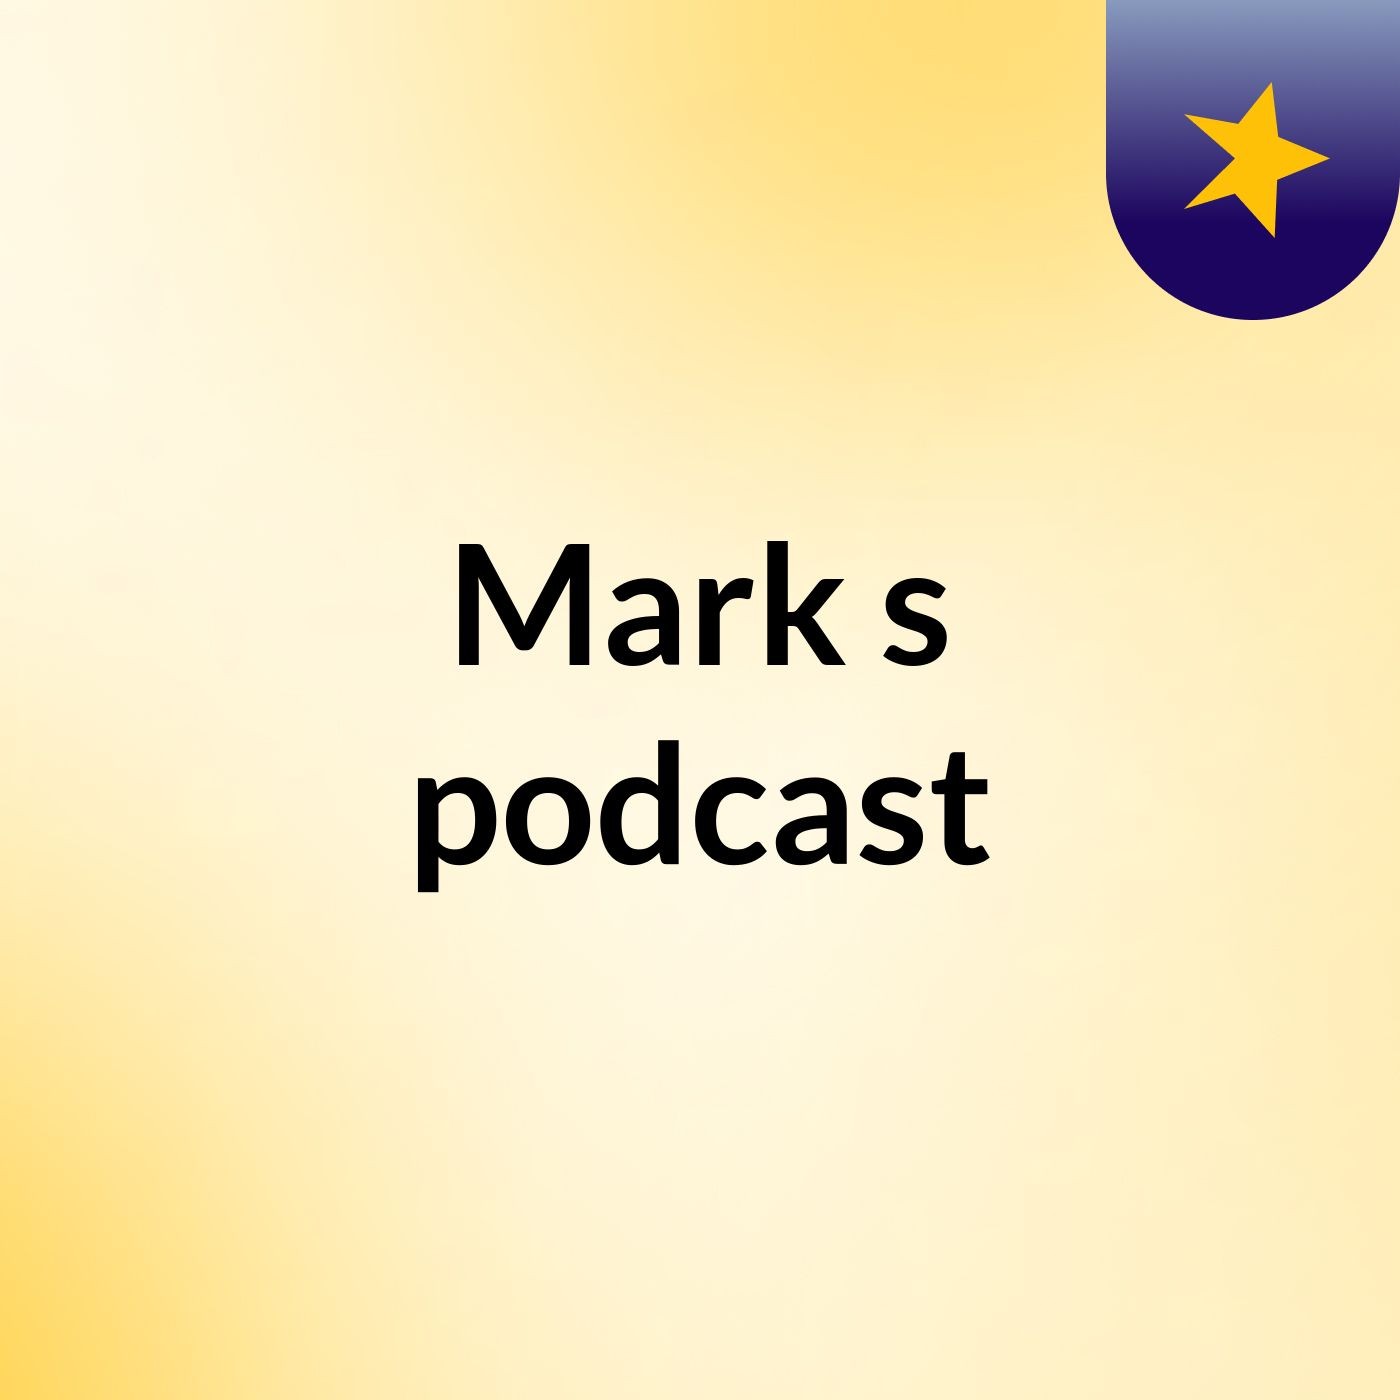 Episode 5 - Mark's podcast